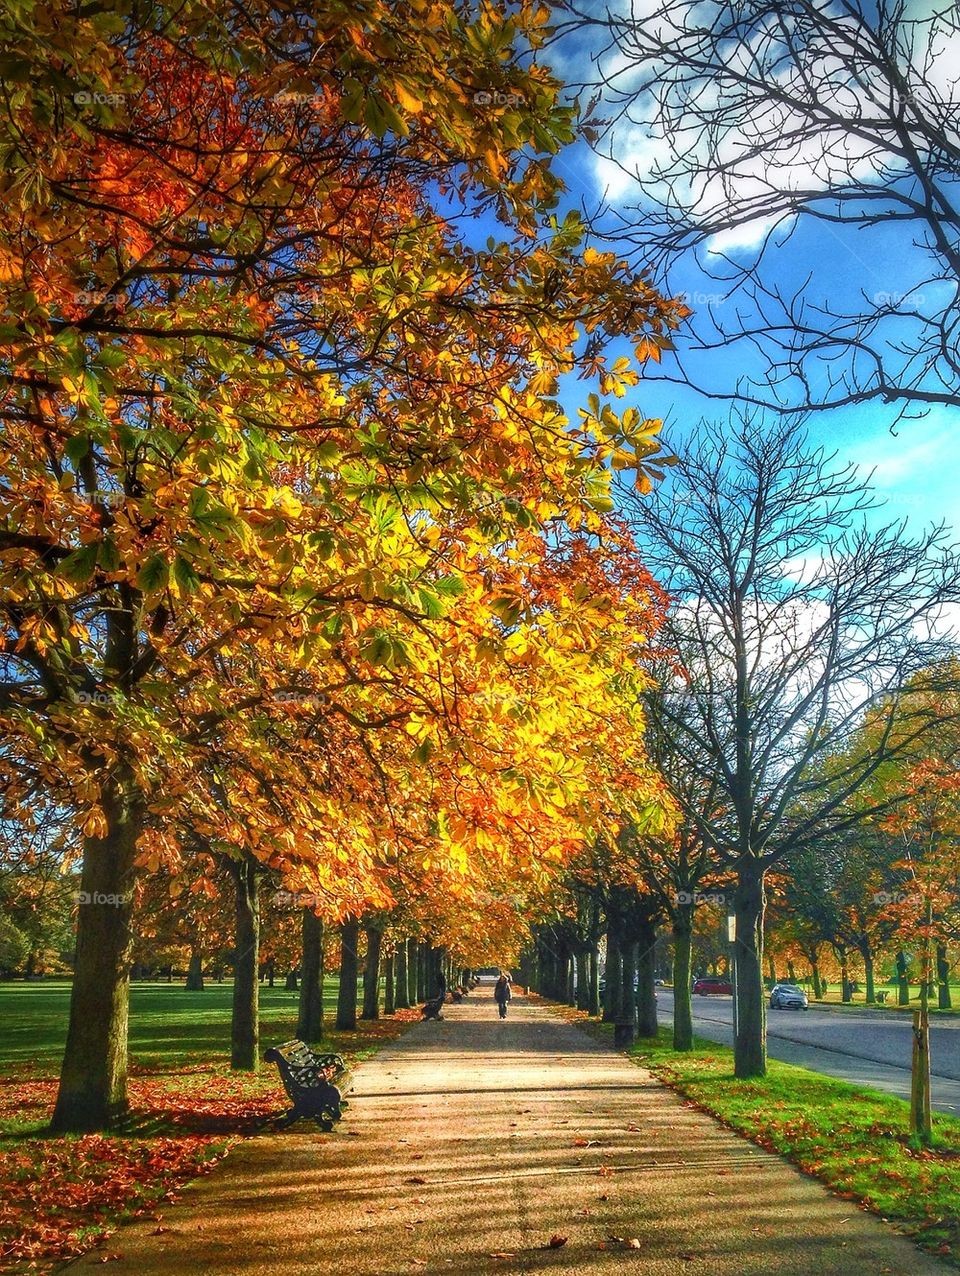 united kingdom park fall autumn by lateproject